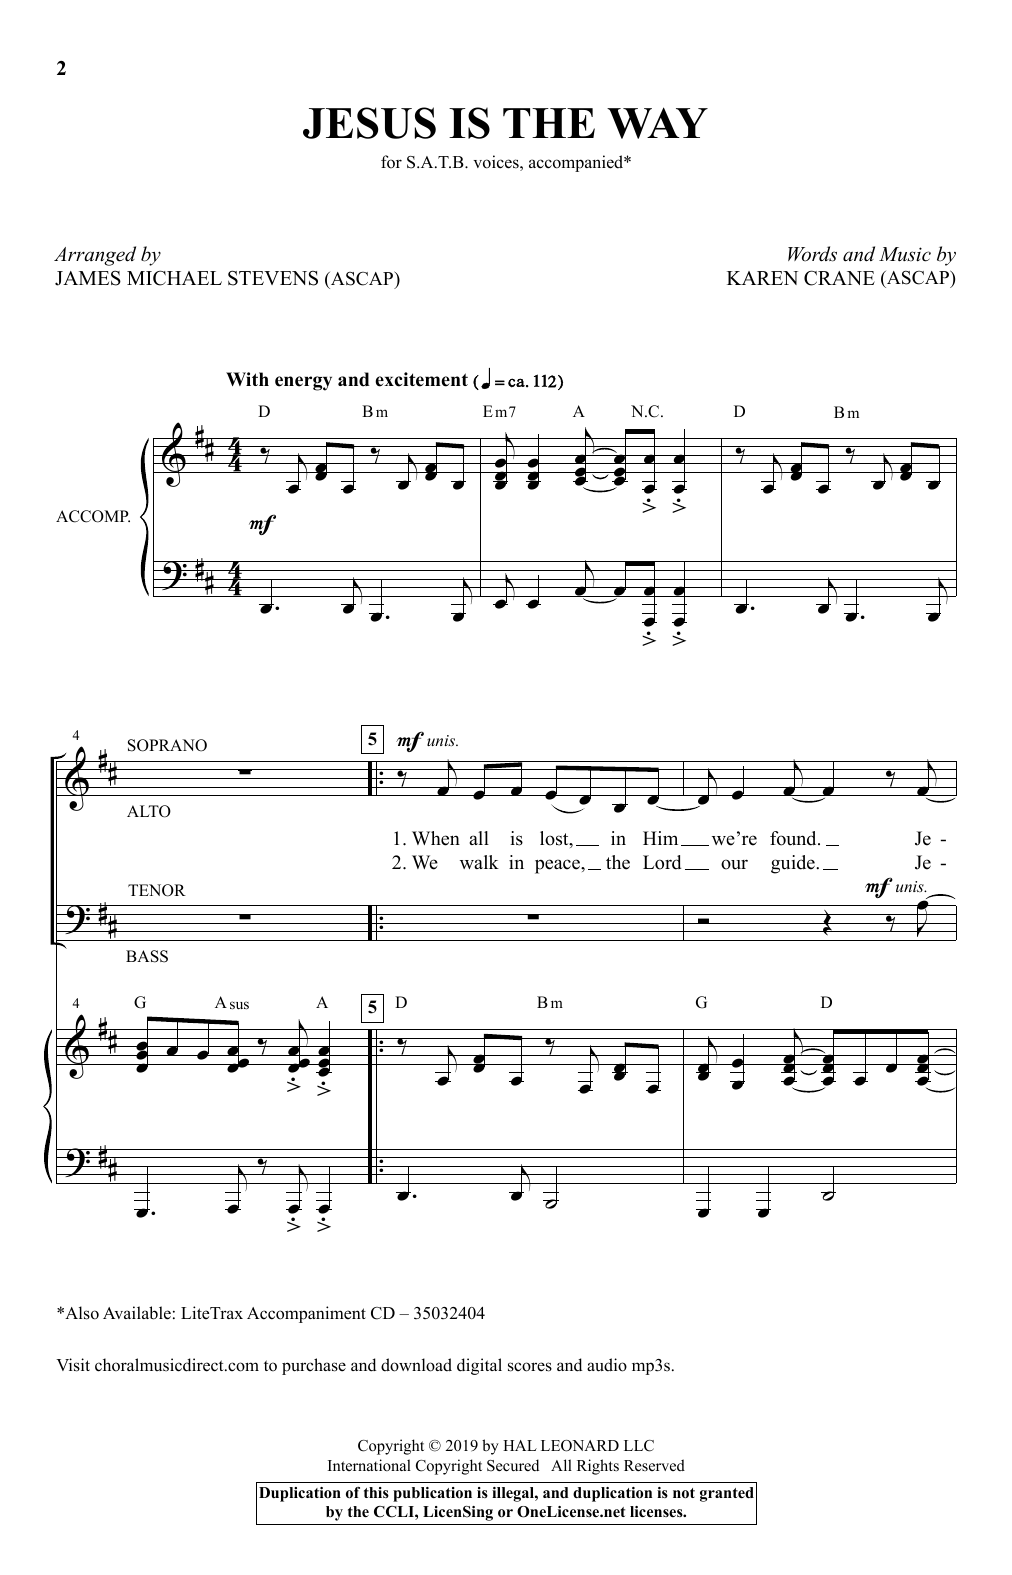 Karen Crane Jesus Is The Way (arr. James Michael Stevens) Sheet Music Notes & Chords for SATB Choir - Download or Print PDF